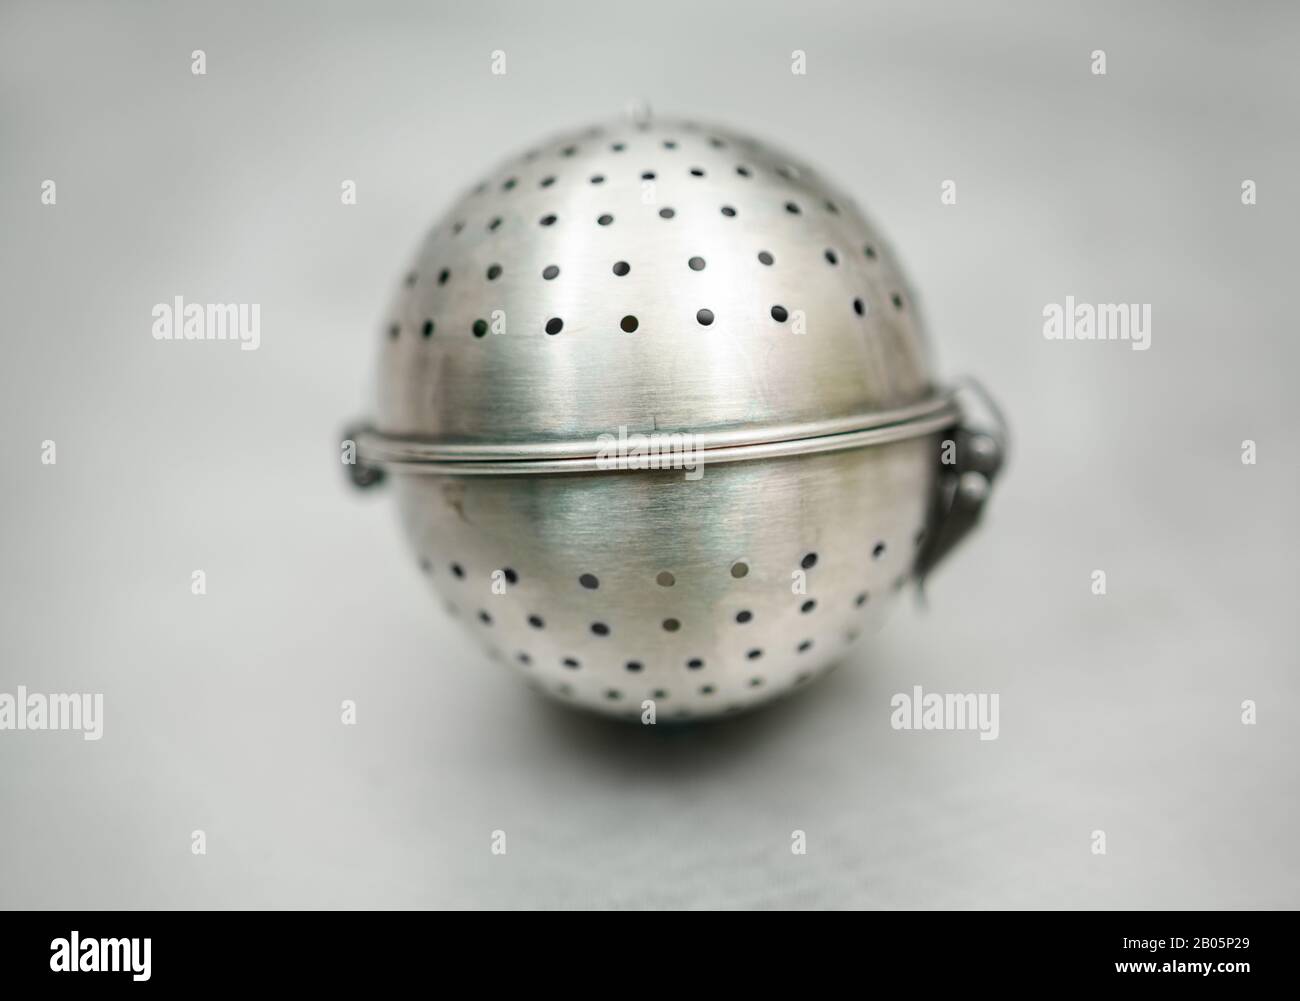 A rice / tea metal ball. Stock Photo